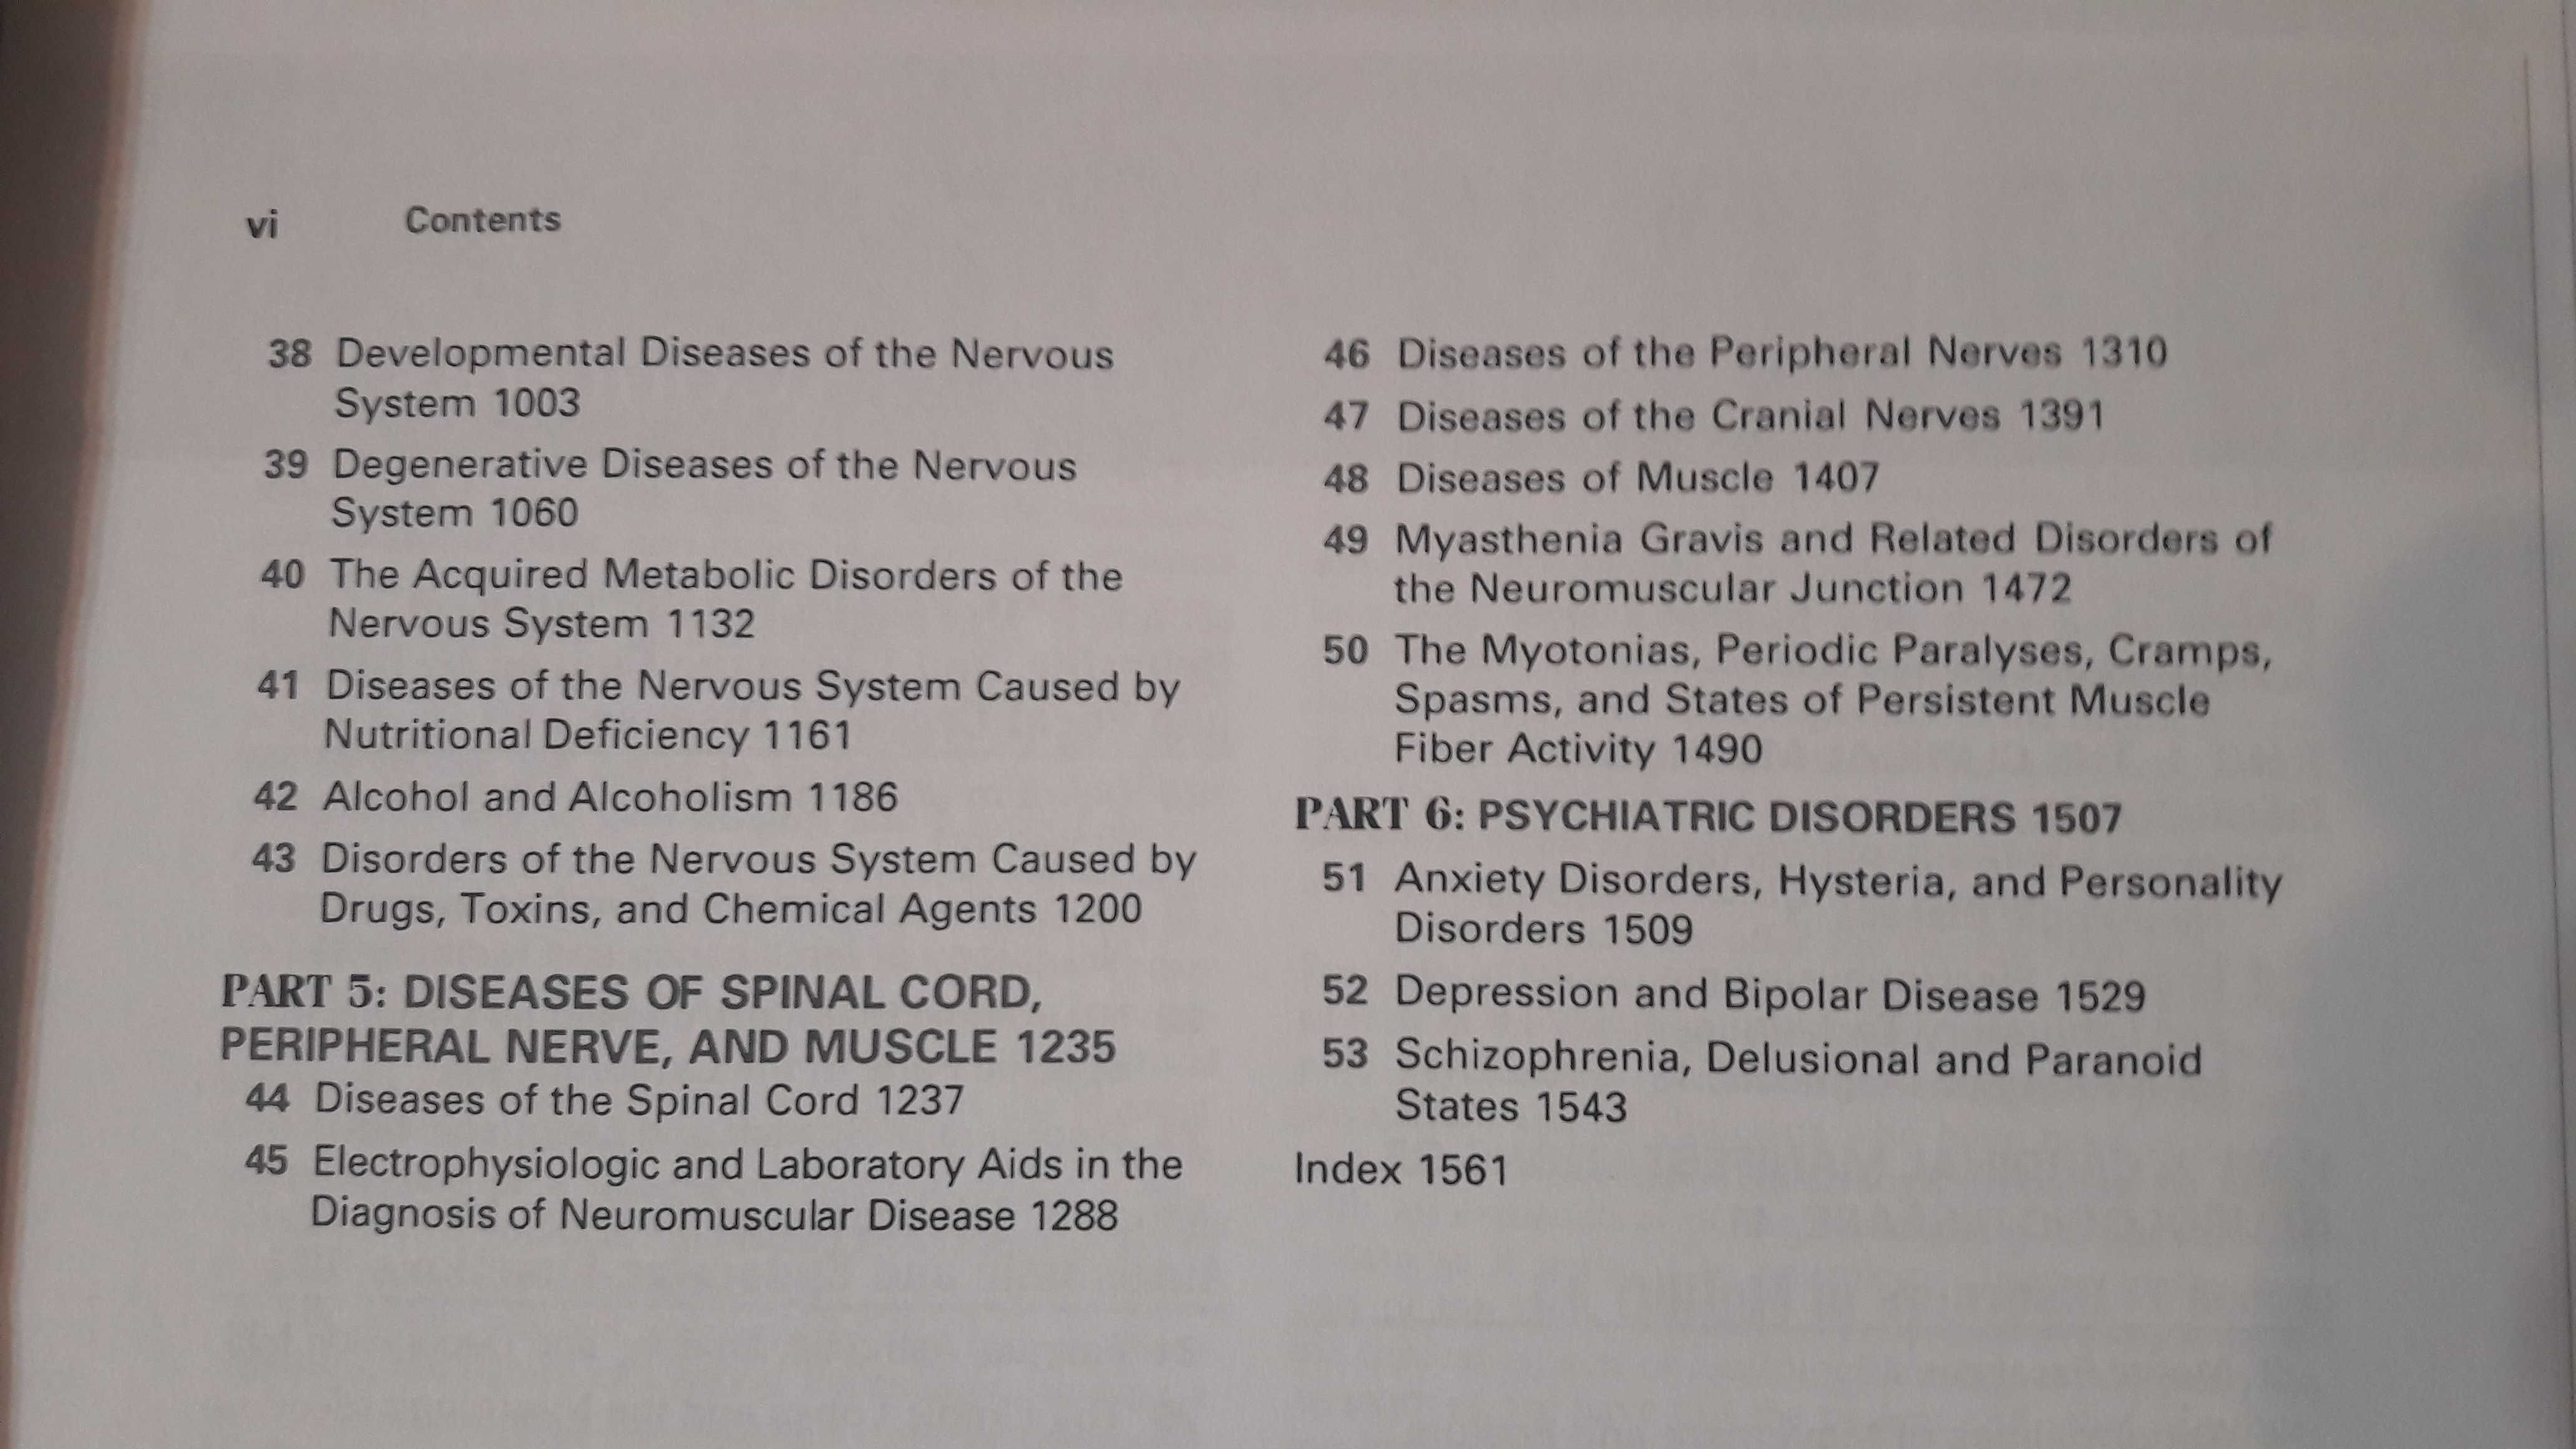 Carte neurologie Adams & Victor's Principles of Neurology 10th edition